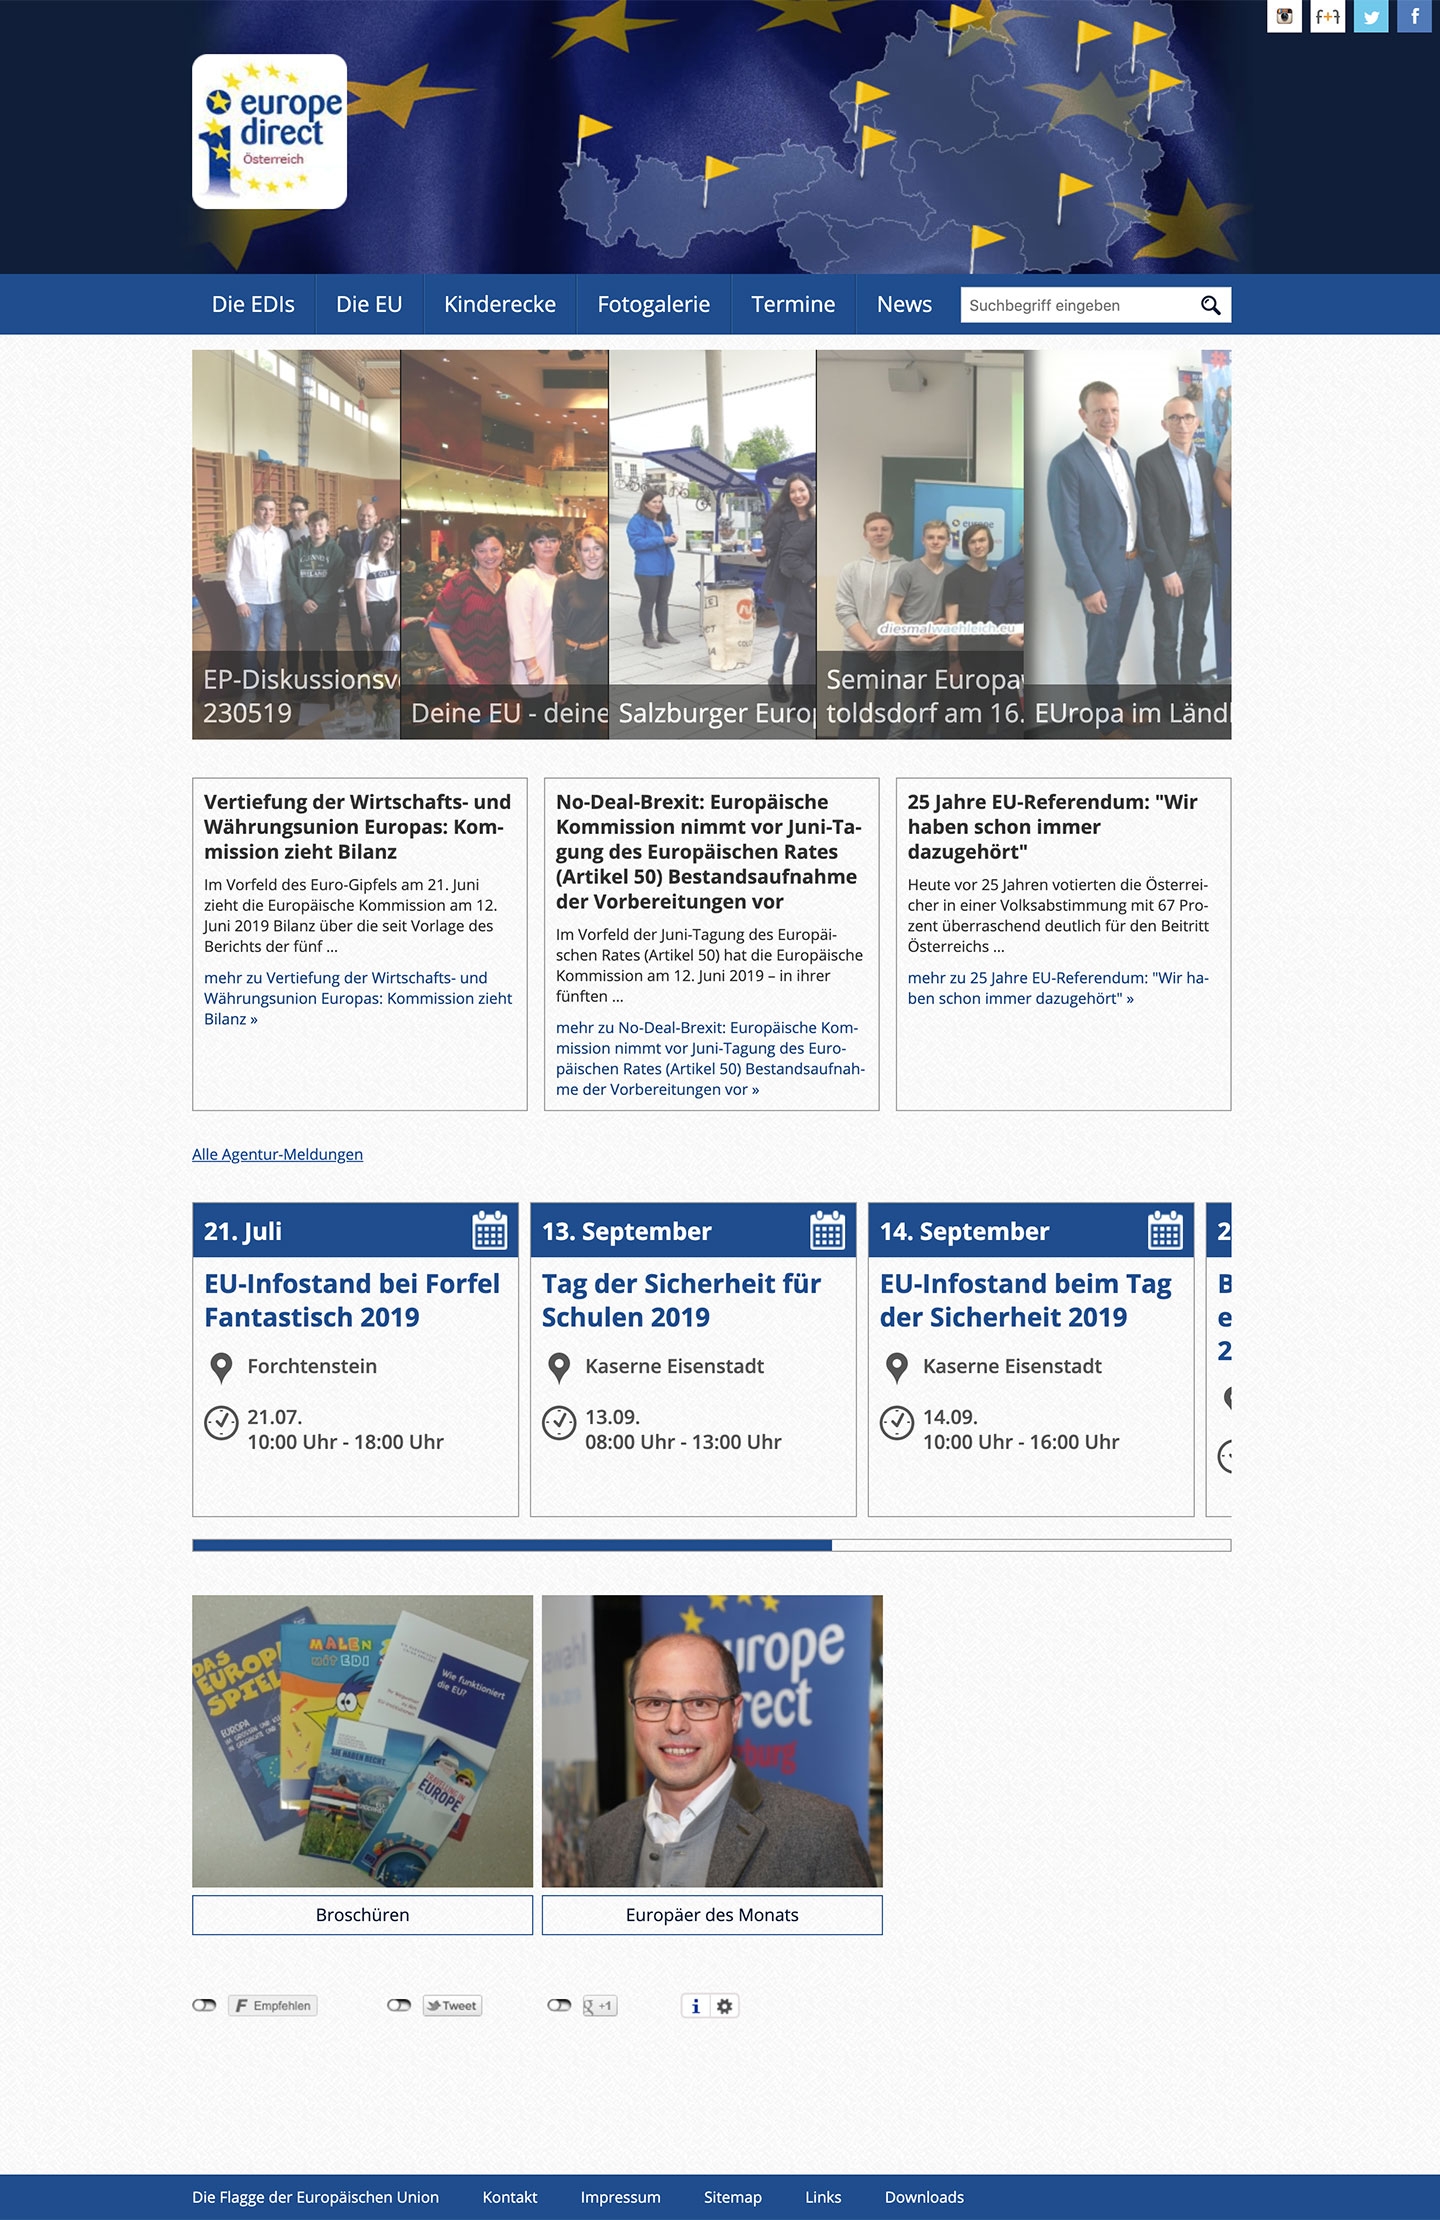 Europe Direct | europainfo.at | 2014 (Screen Full Scroll) © echonet communication